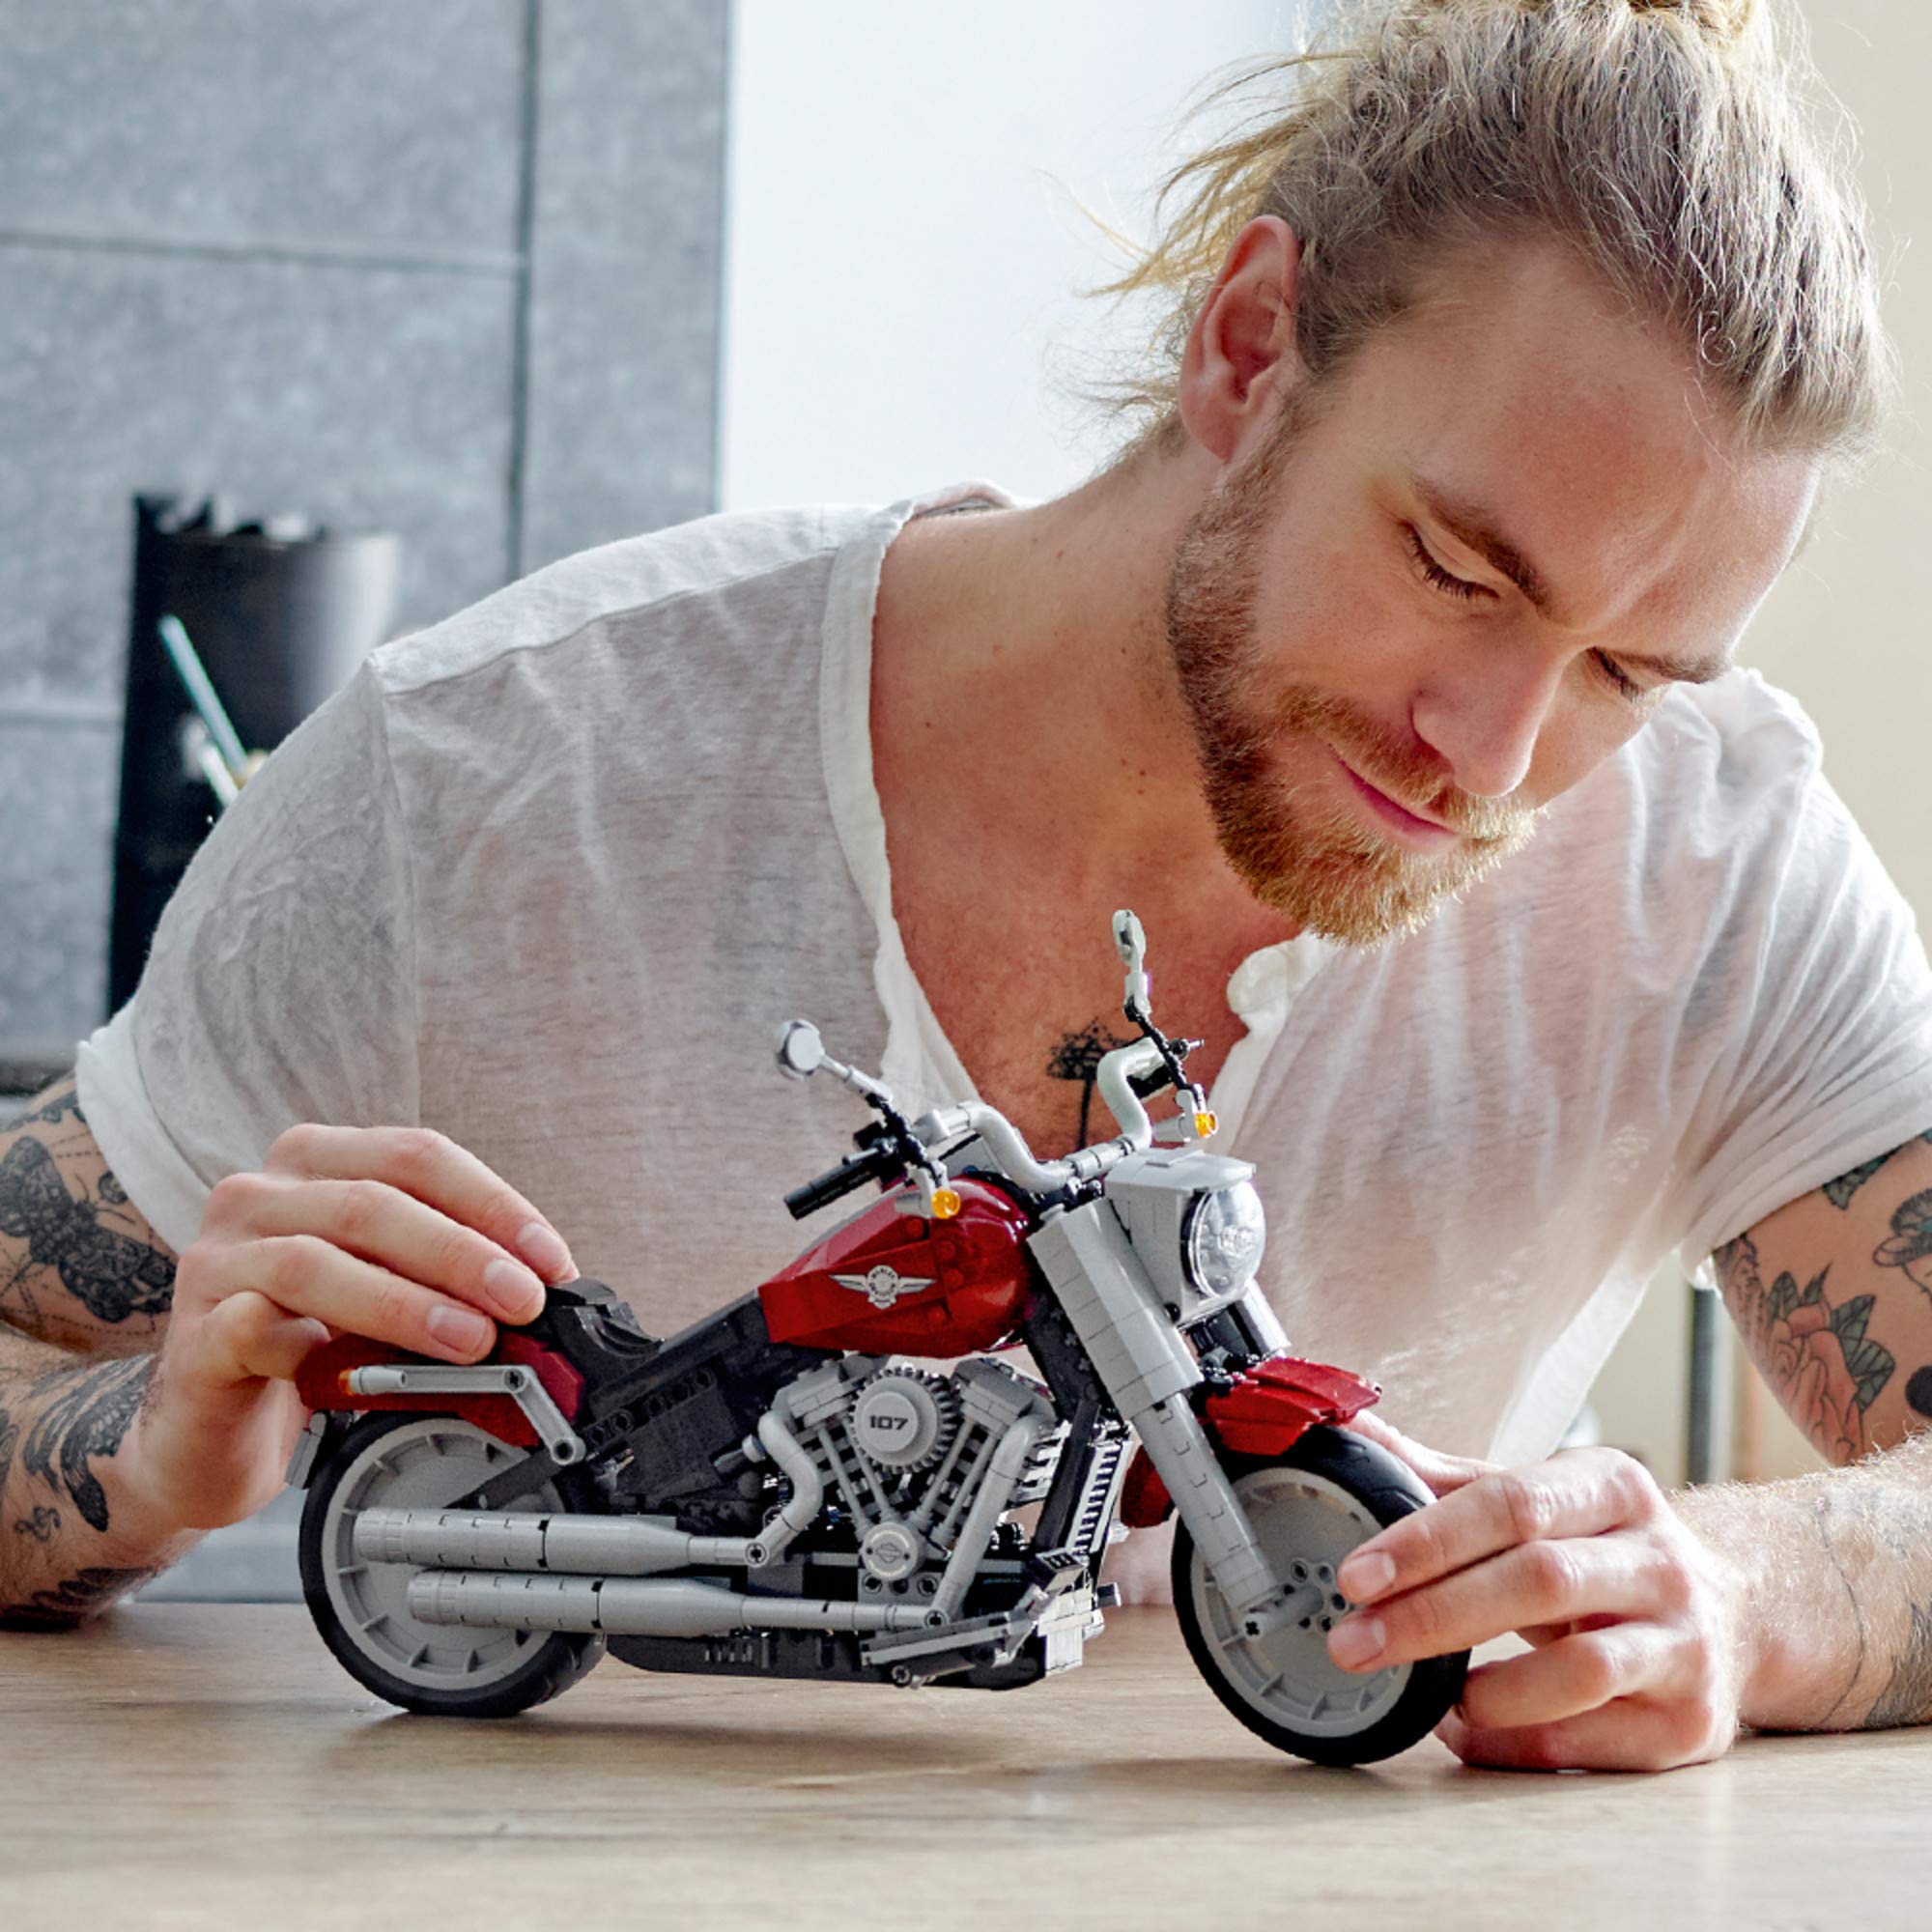 LEGO Creator Expert Harley-Davidson Fat Boy 10269 Building Kit (1,023 Pieces)